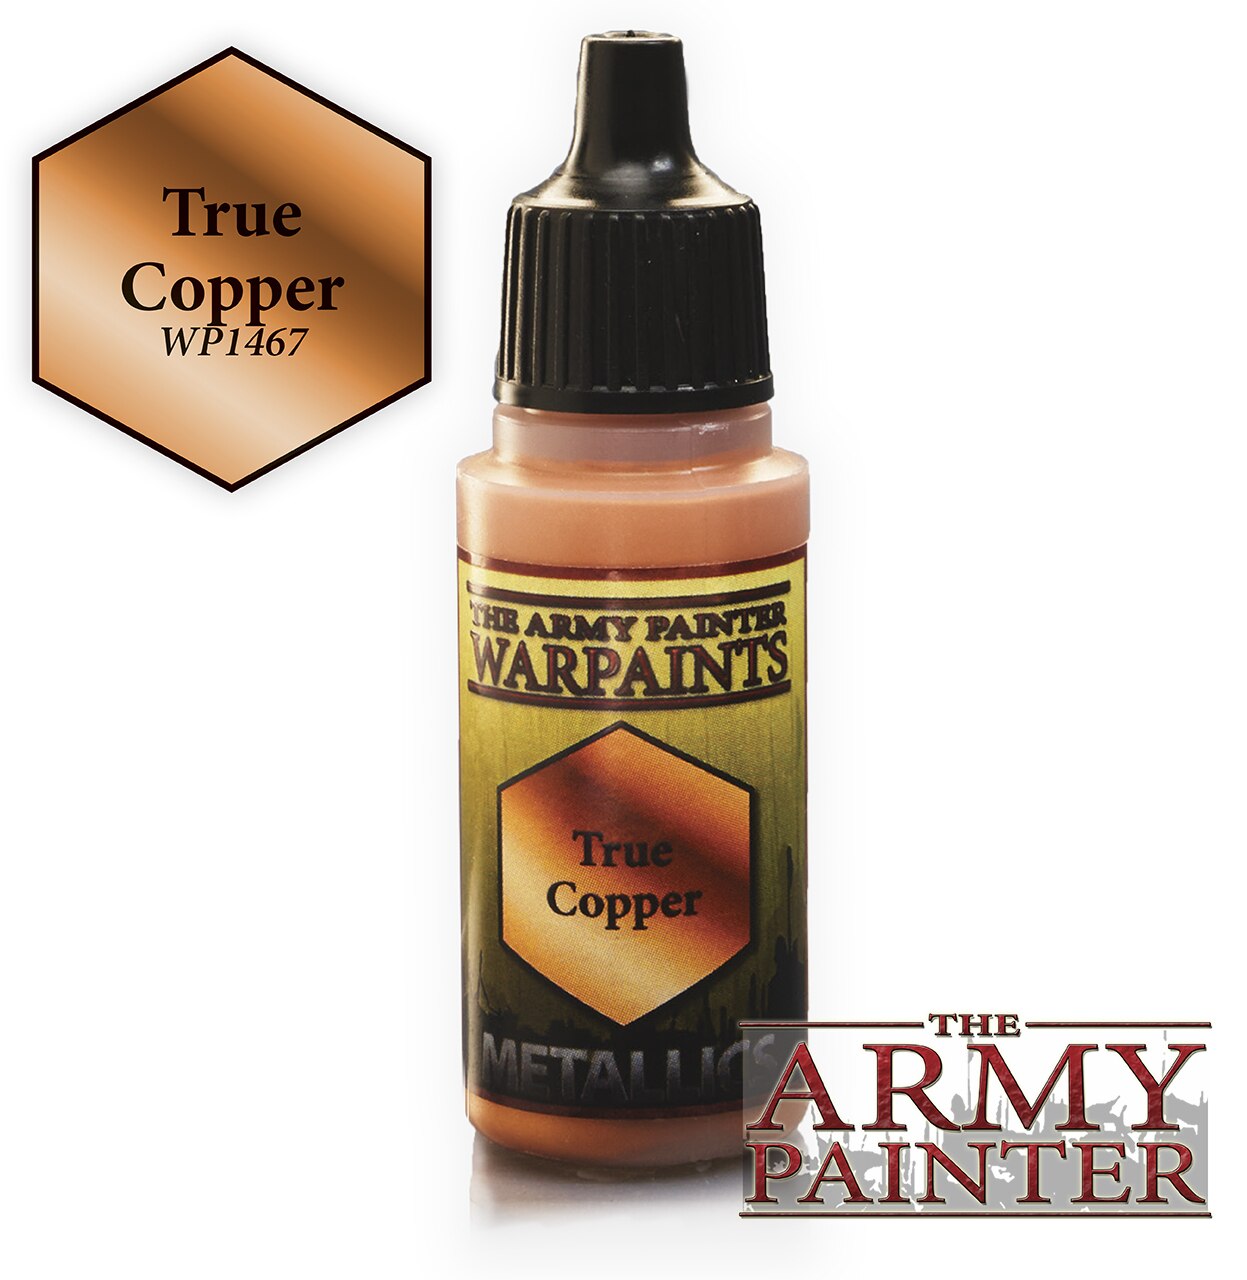 Army Painter Warpaint - True Copper